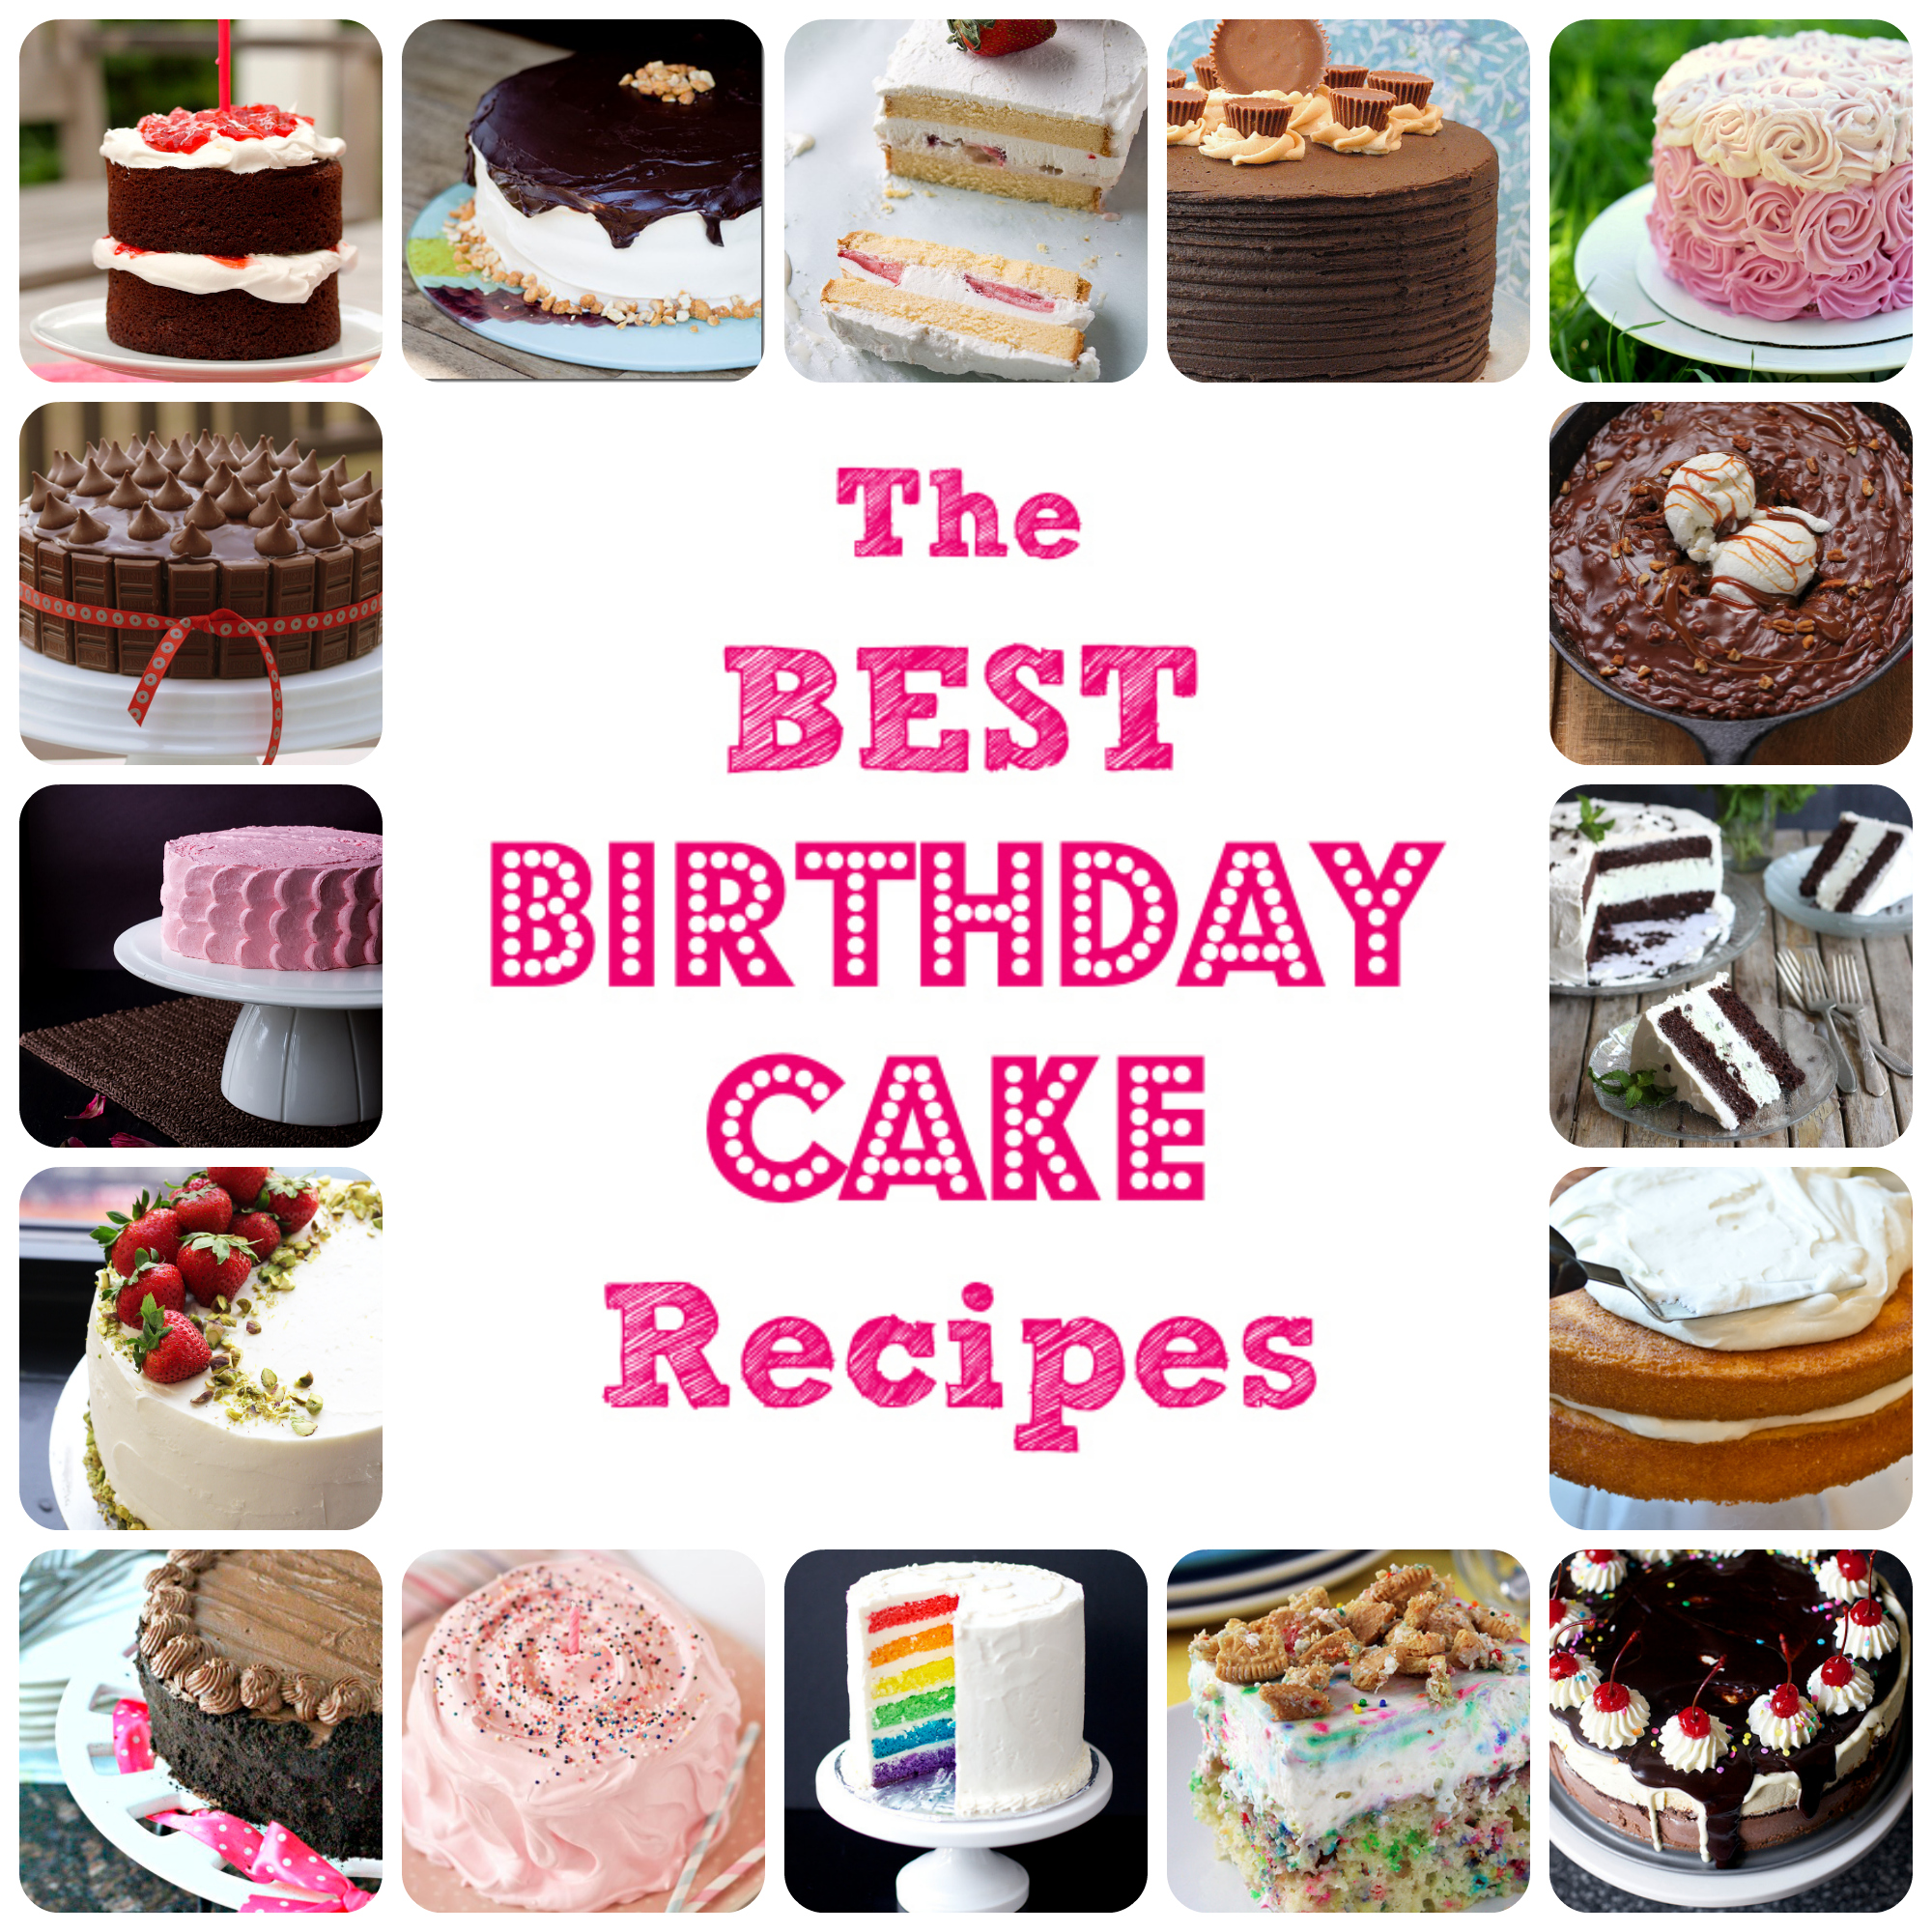 The best birthday cake recipes